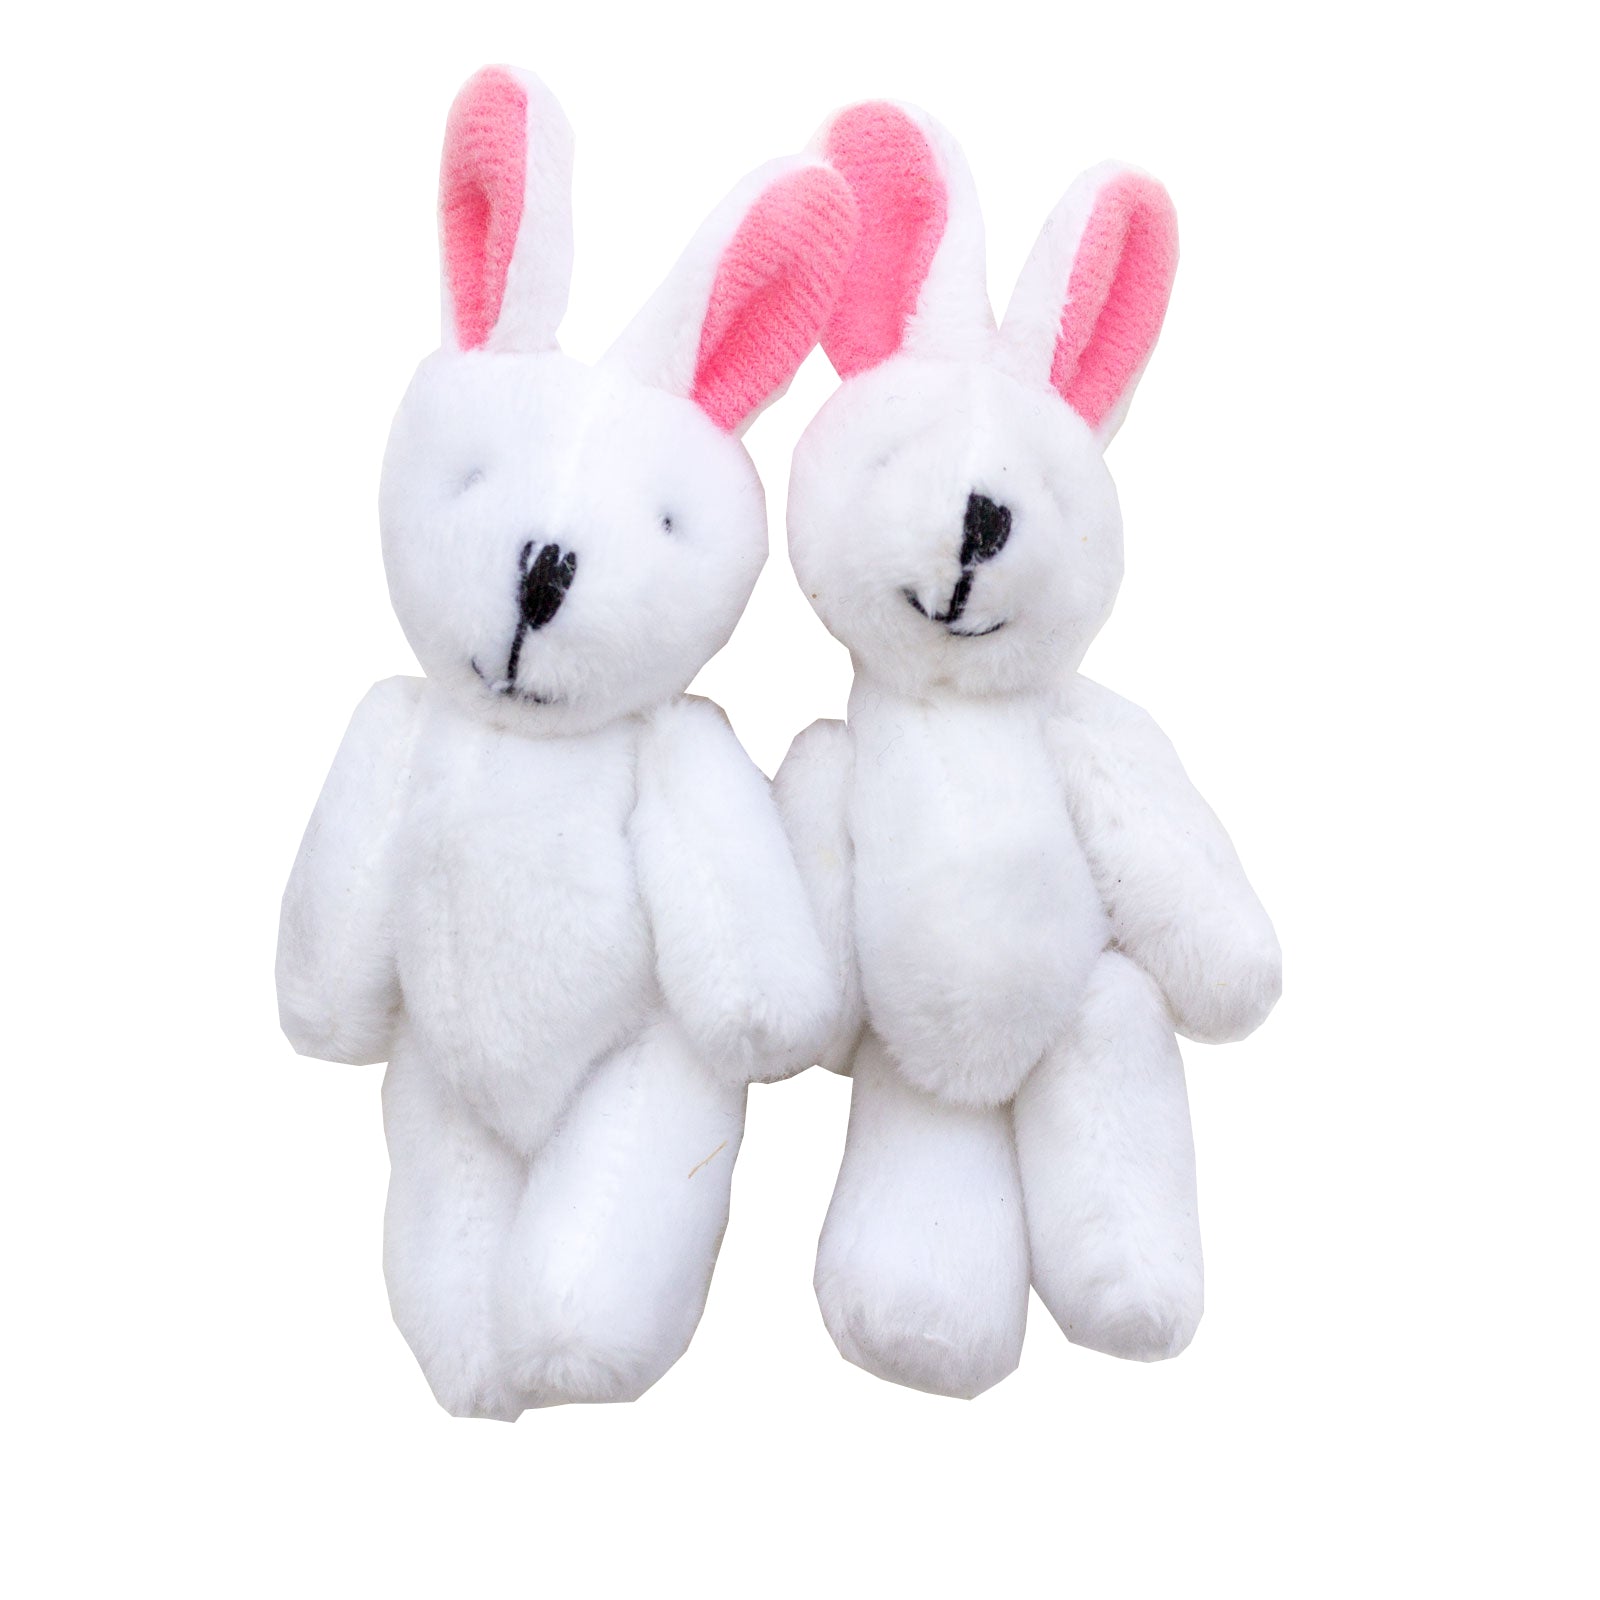 Small Rabbits X 85 - Cute Soft Adorable